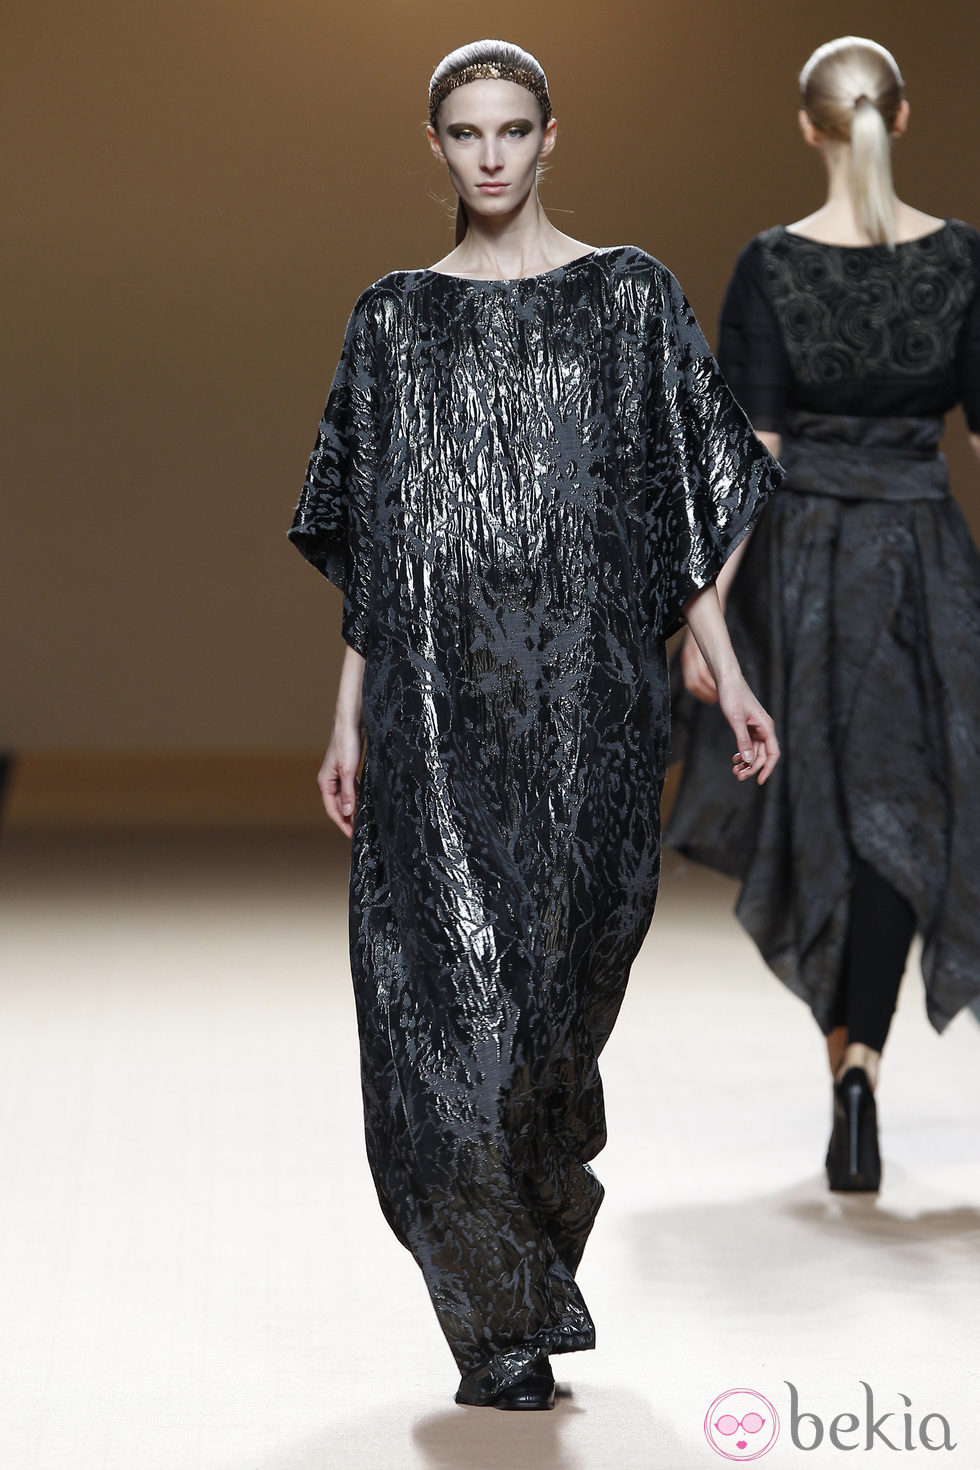 Desfile de Jesus del Pozo en la Fashion Week Madrid: vestido túnica negra metalizada